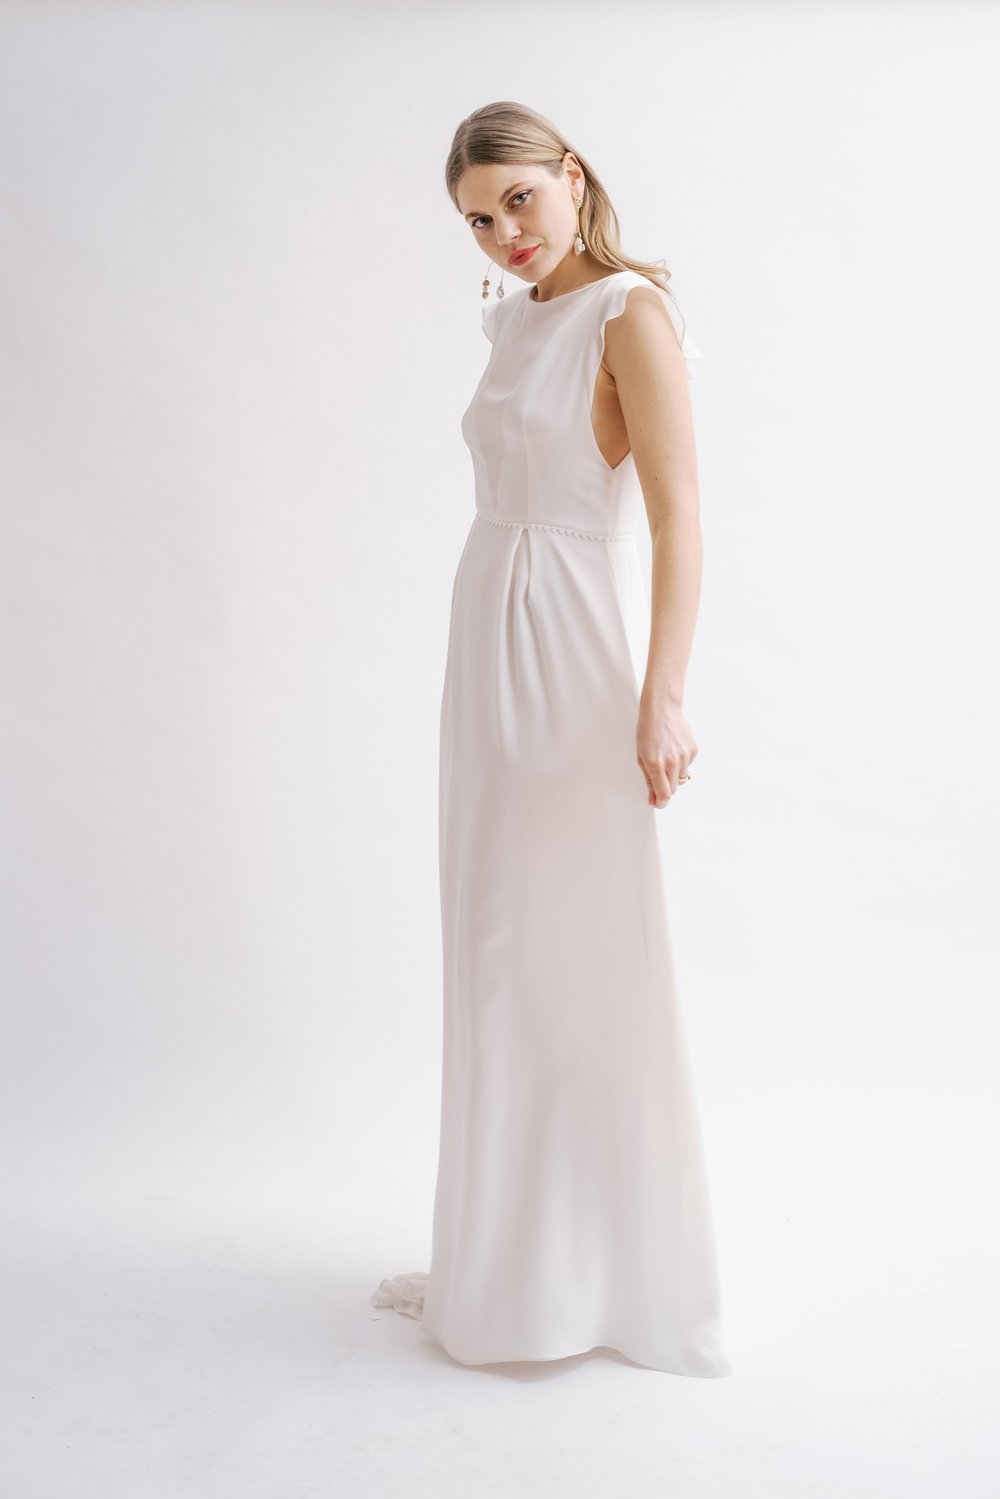 Agapanthus modern silk wedding gown Kate Beaumont Sheffield 5.jpg